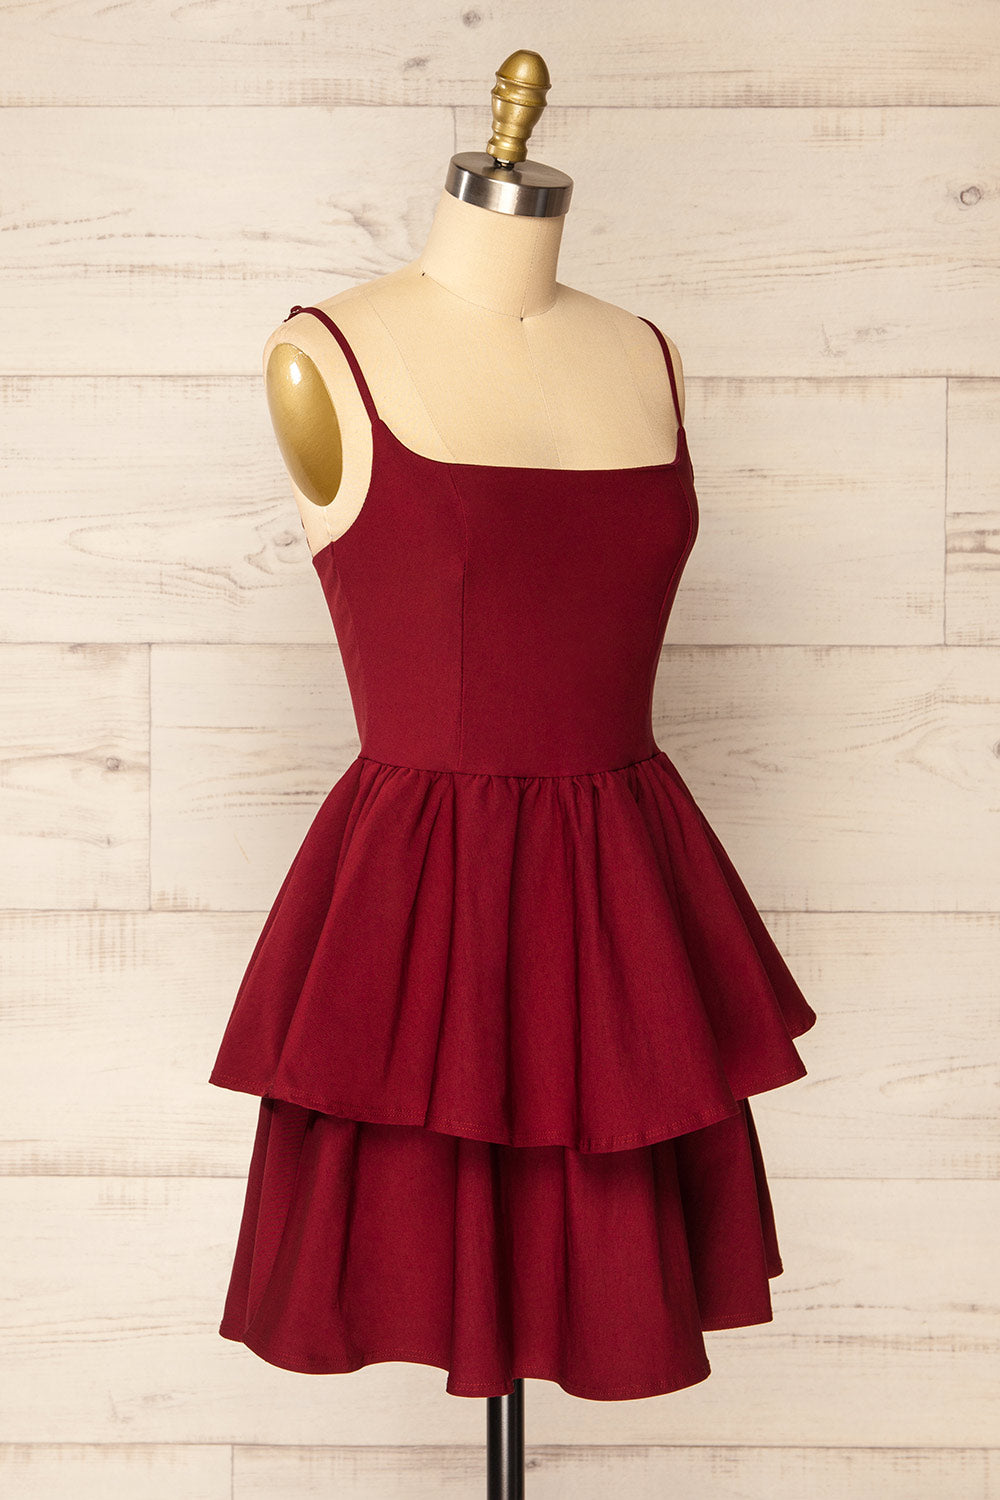 Halter Short Burgundy Lace Junior Prom Dress SHORT146 - TeenTina